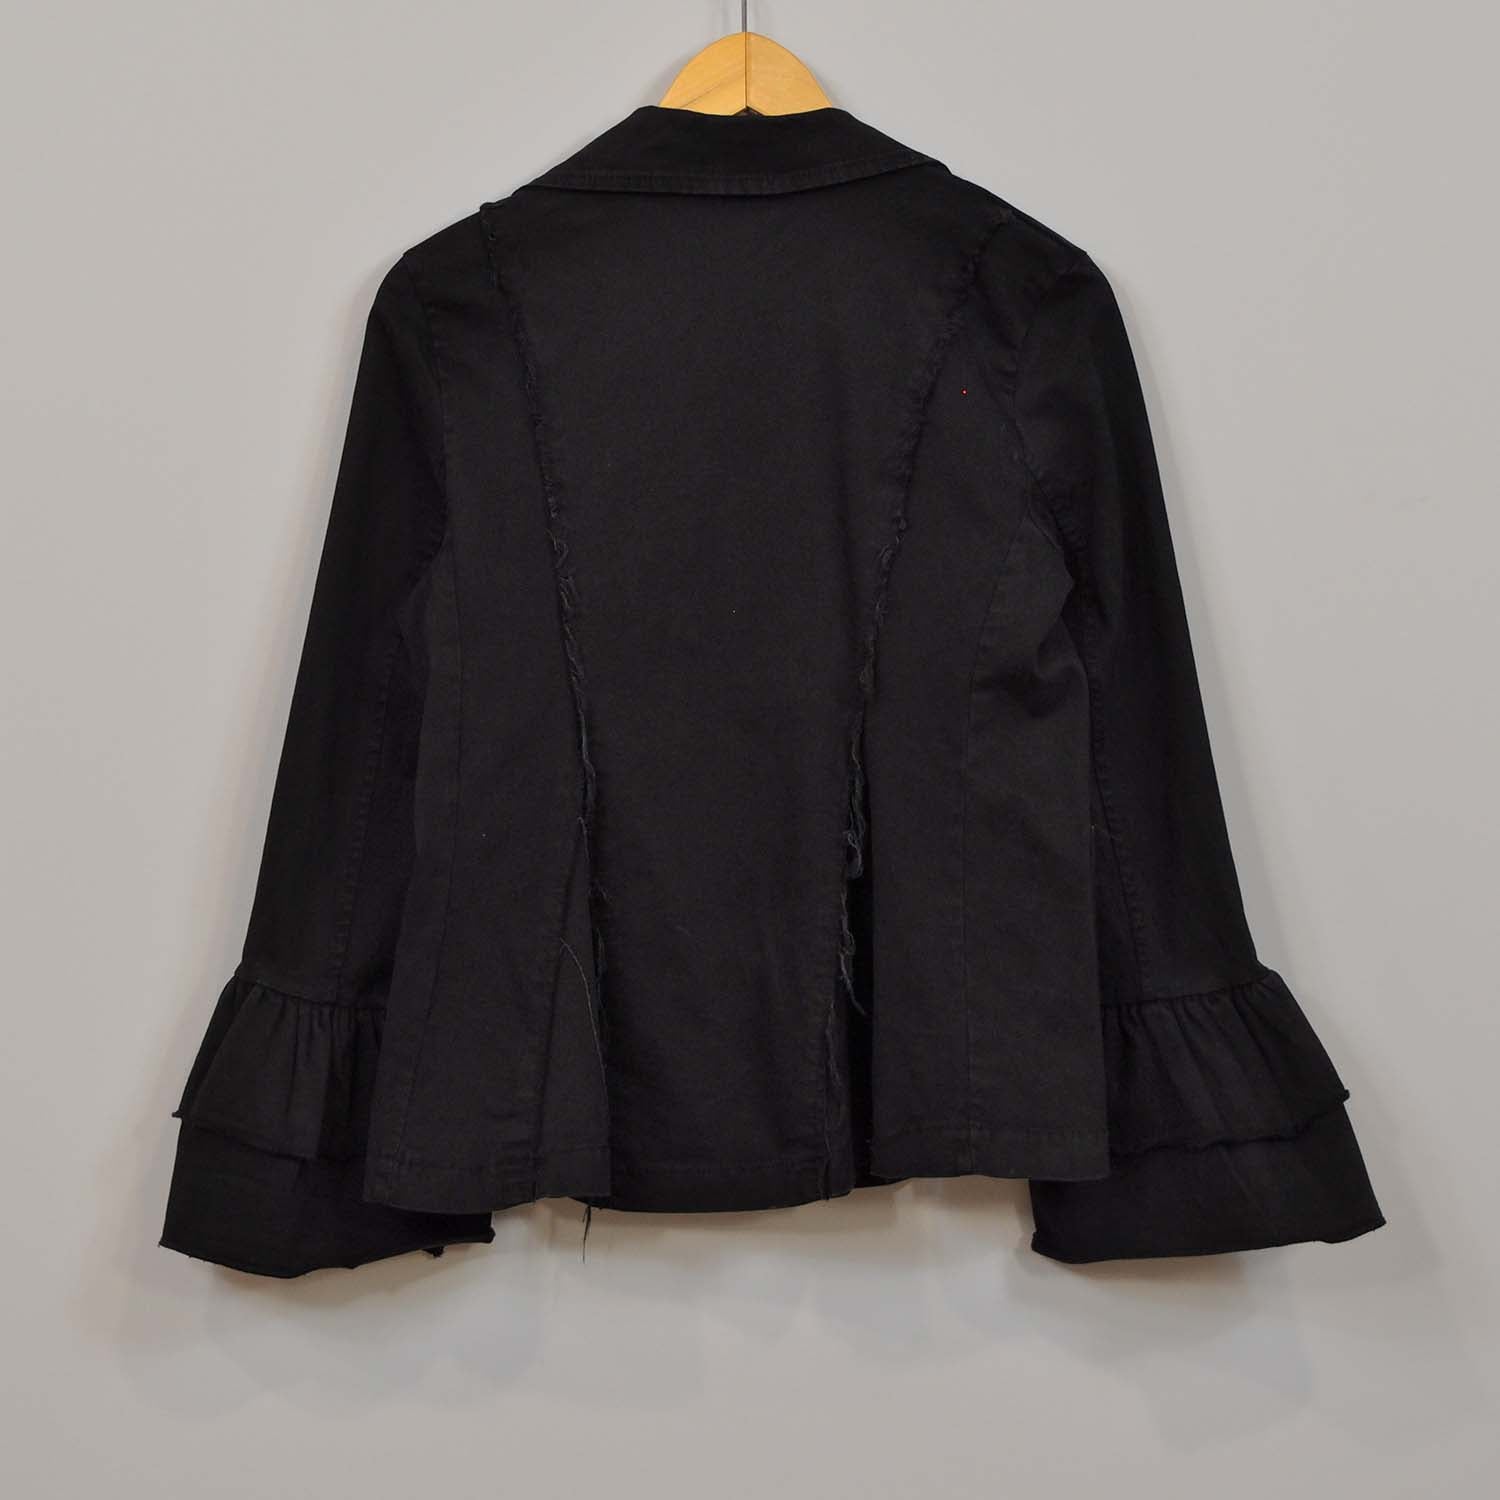 Black ruffled blazer